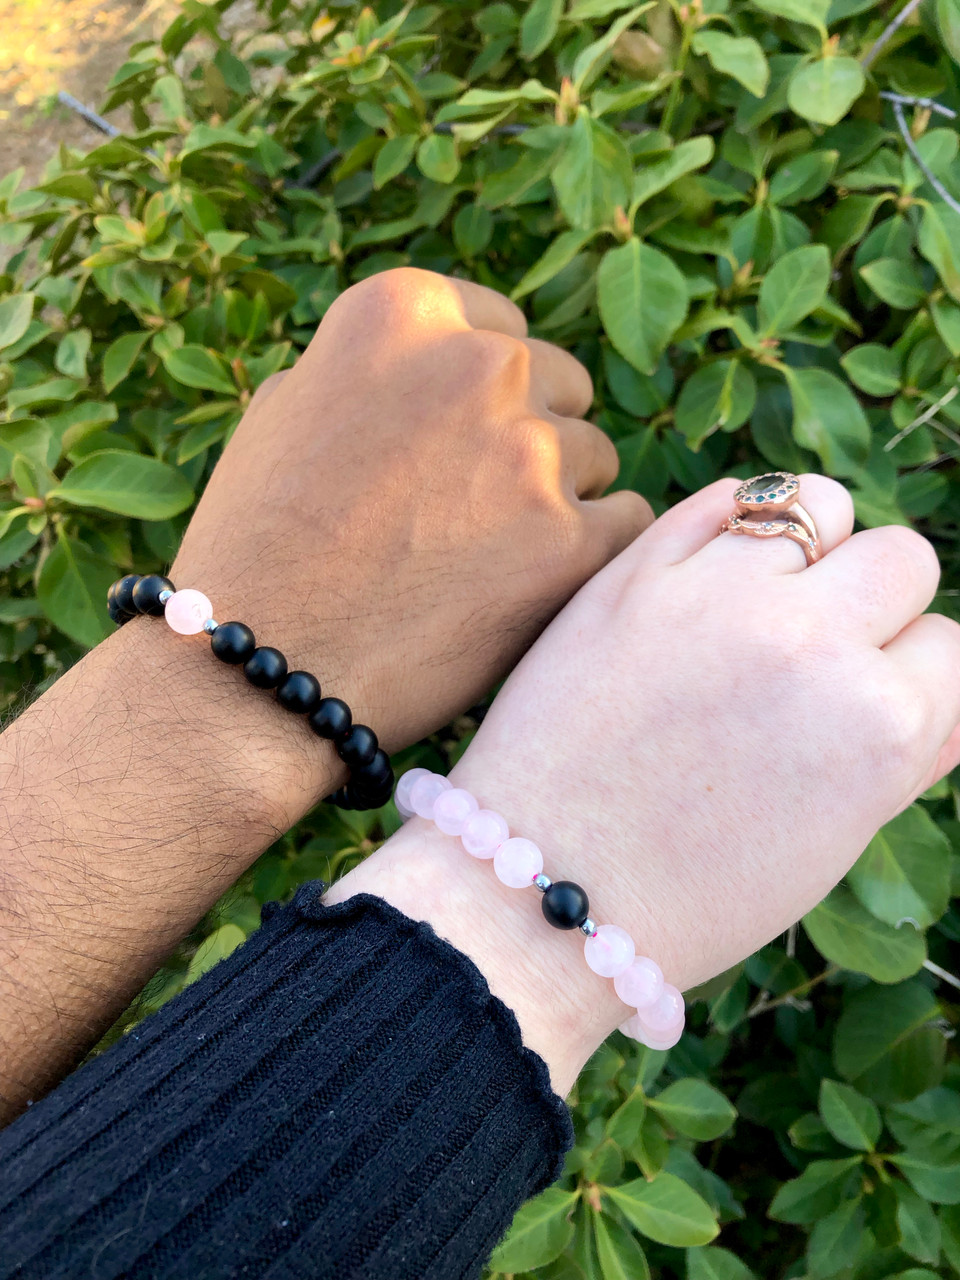 How to Make Friendship Bracelets | eBay